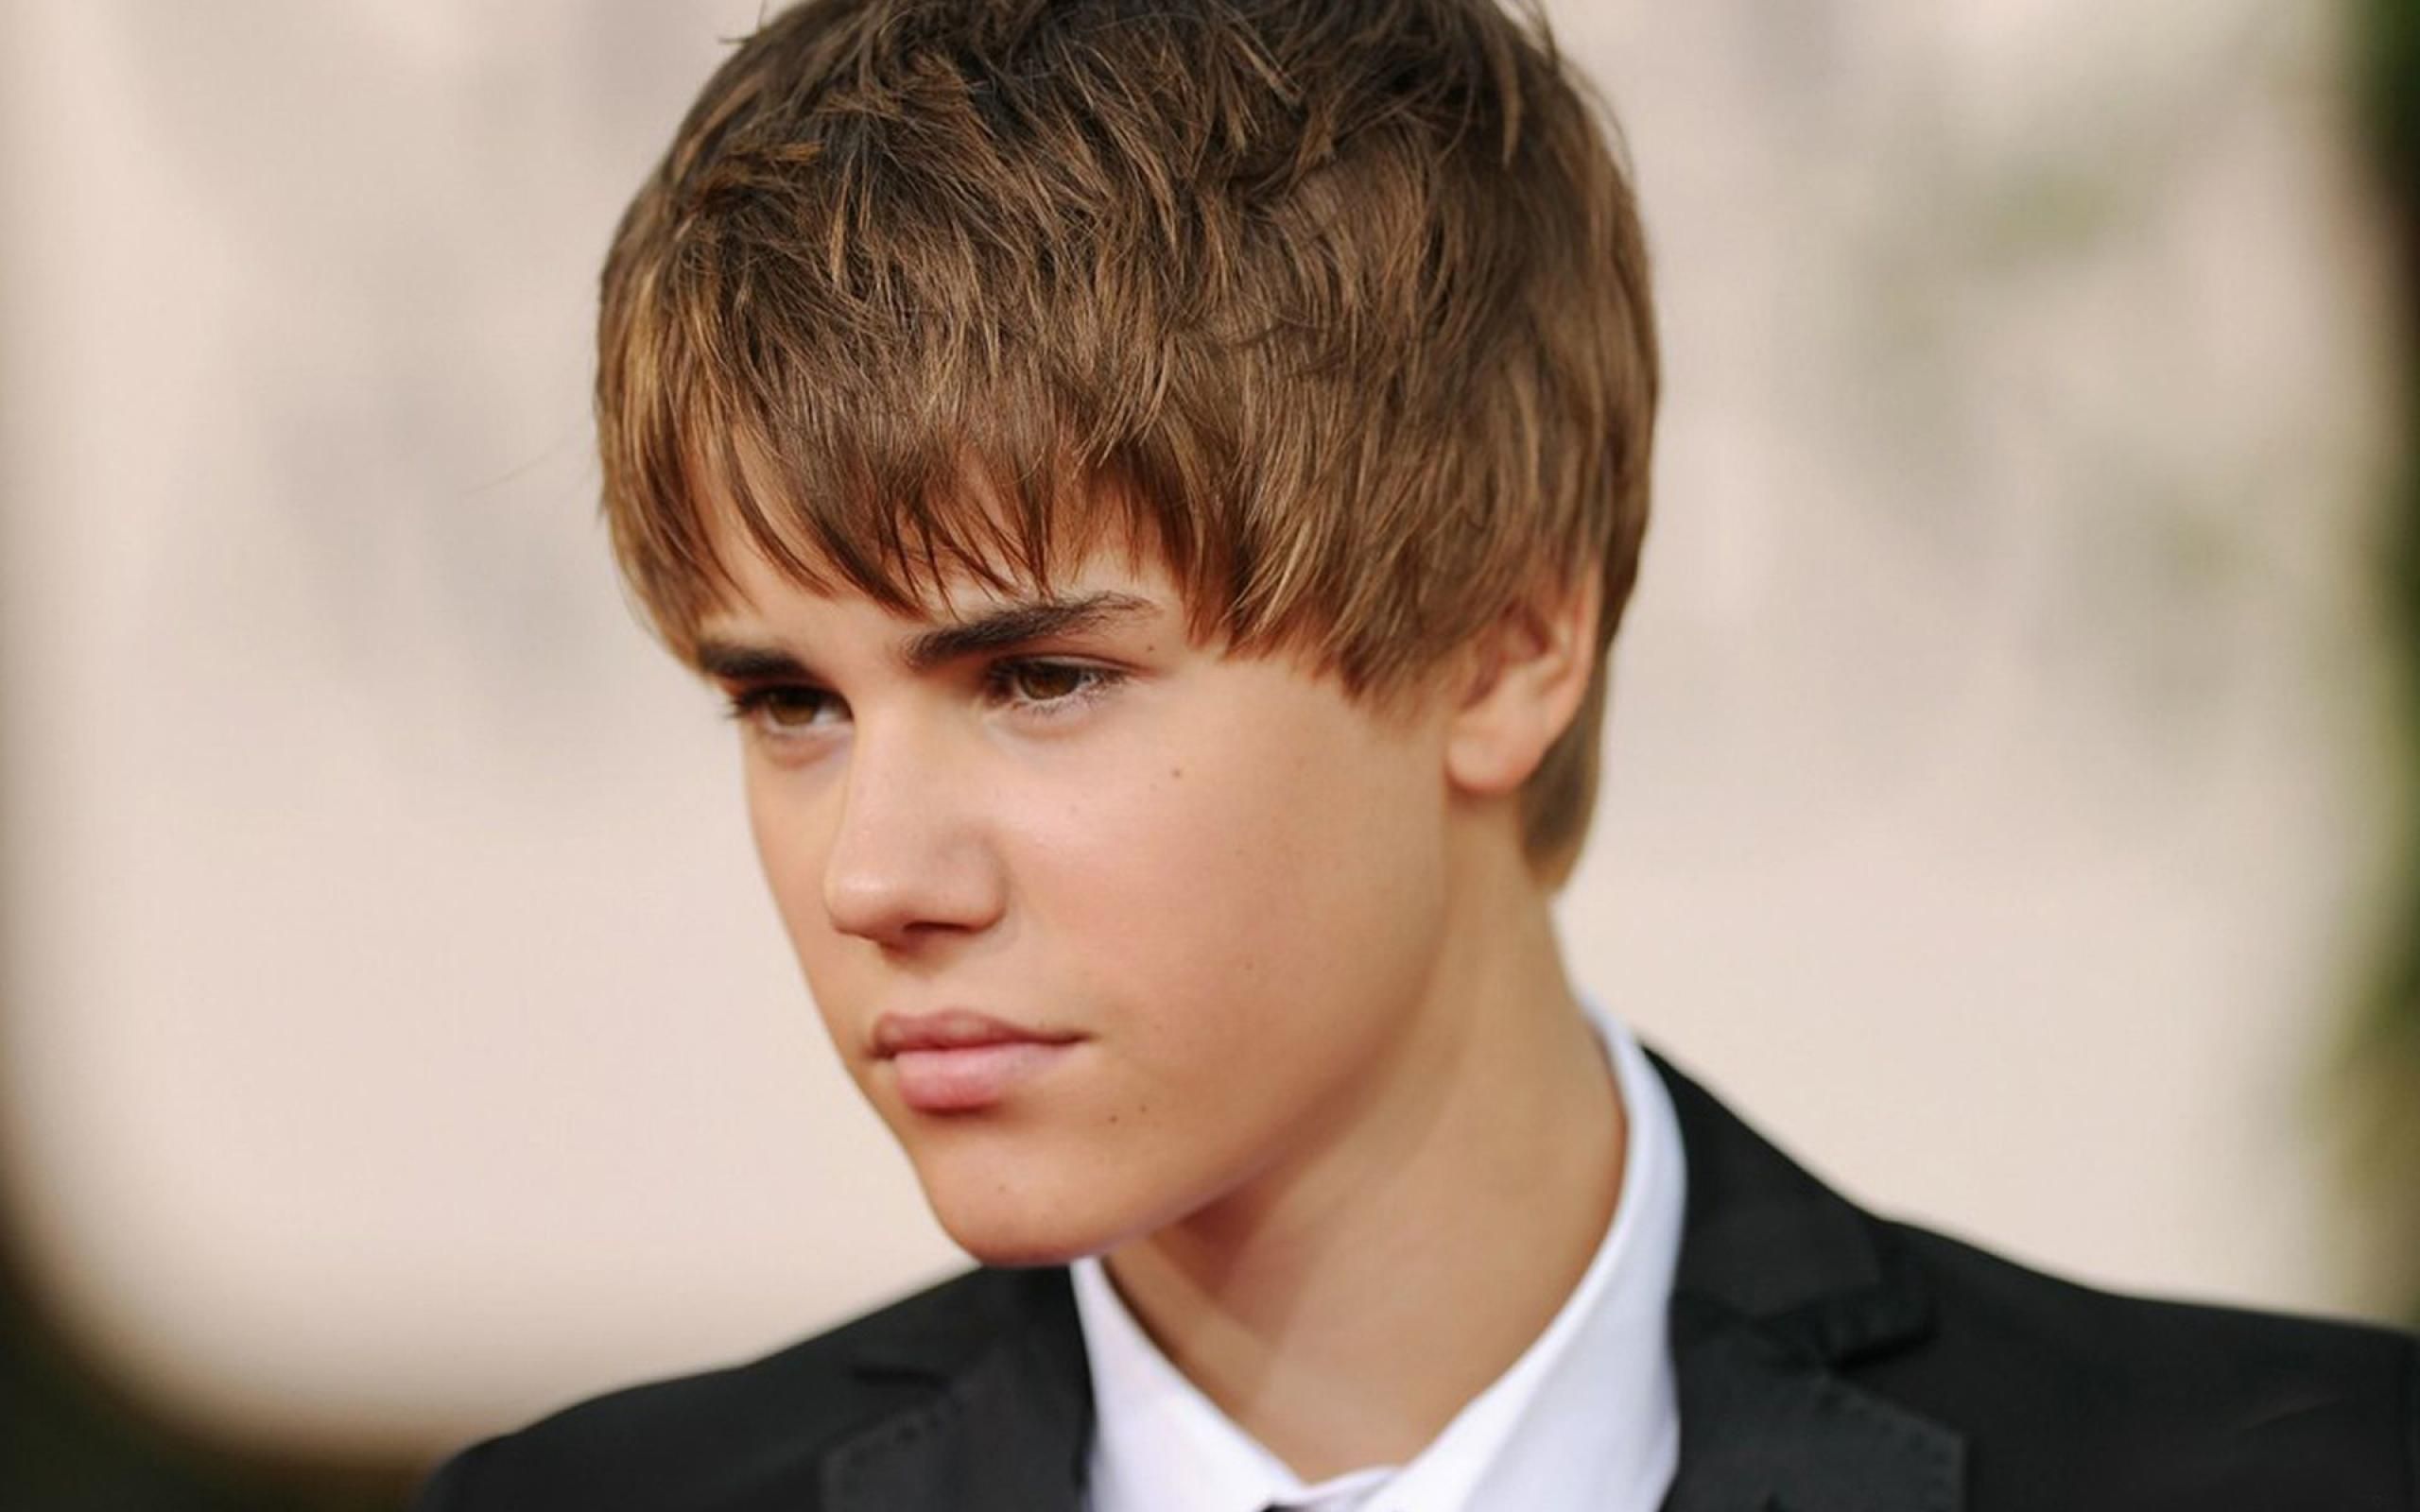 Justin Bieber HD wallpaper Wallpaper, HD Celebrities 4K Wallpaper, Image, Photo and Background